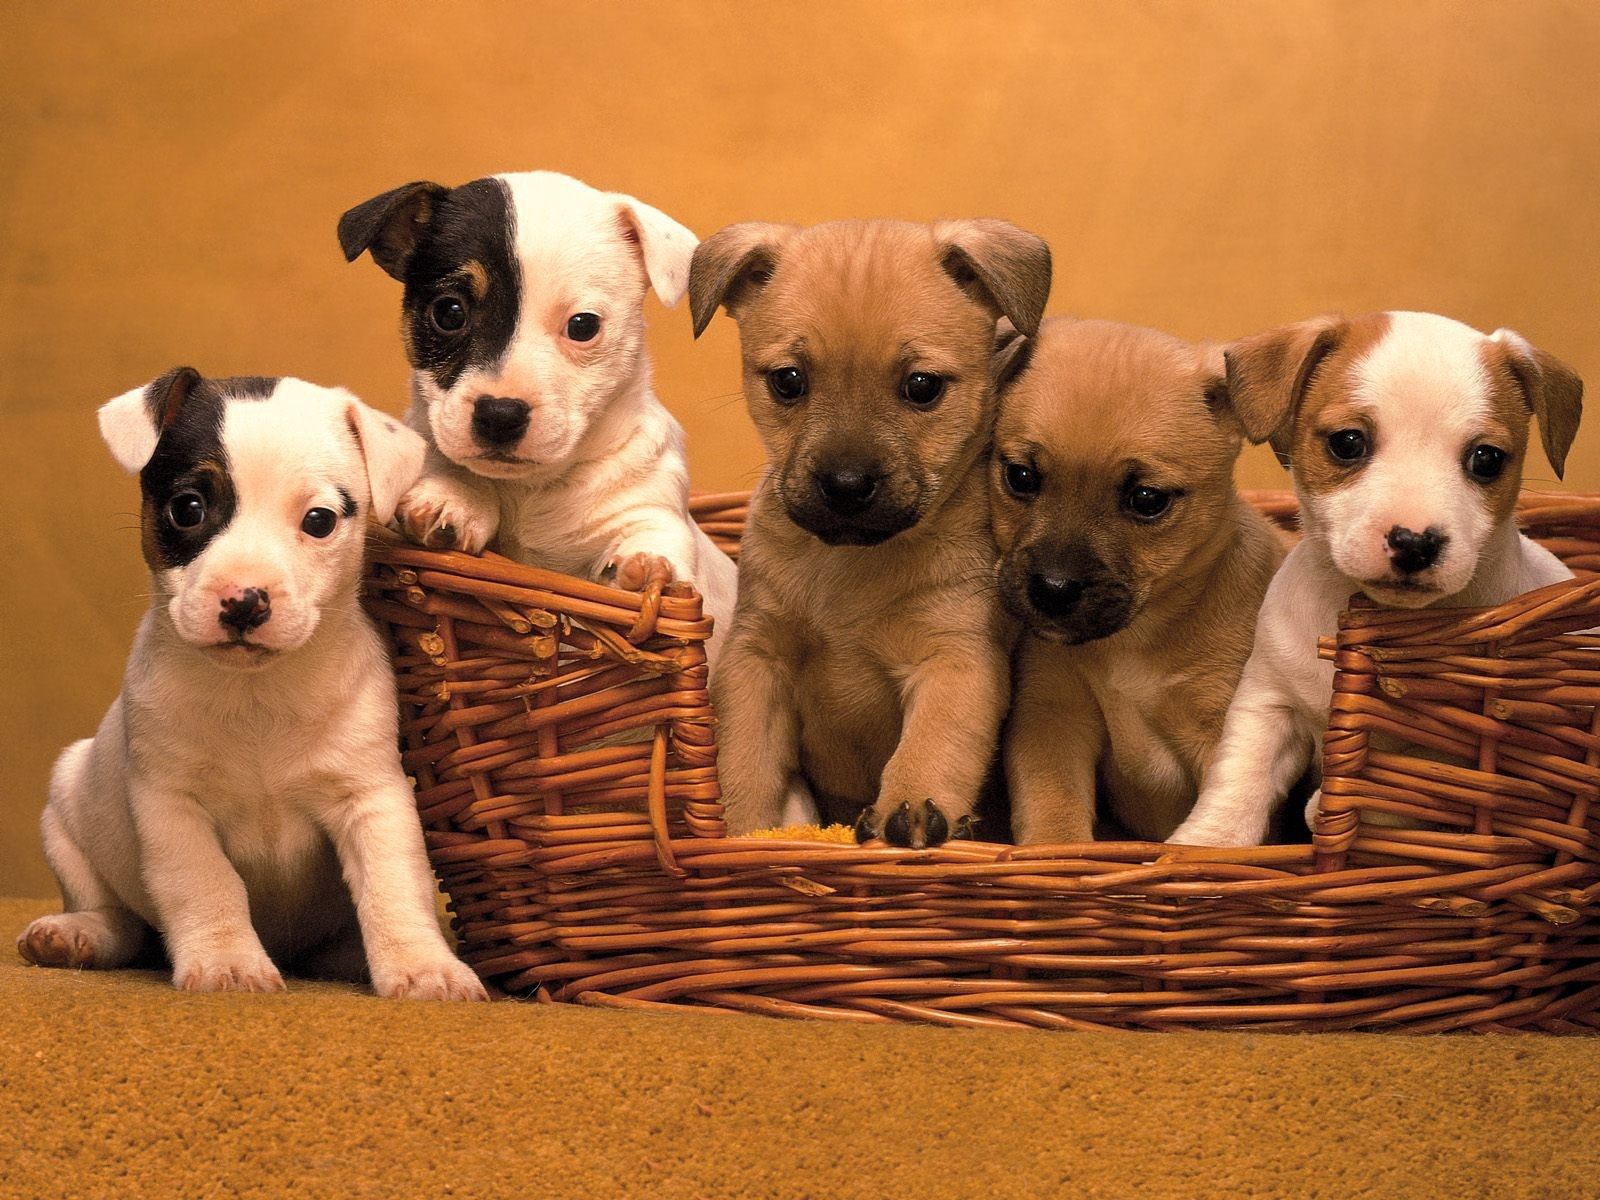 puppies, animals, muzzle, basket, lots of, multitude